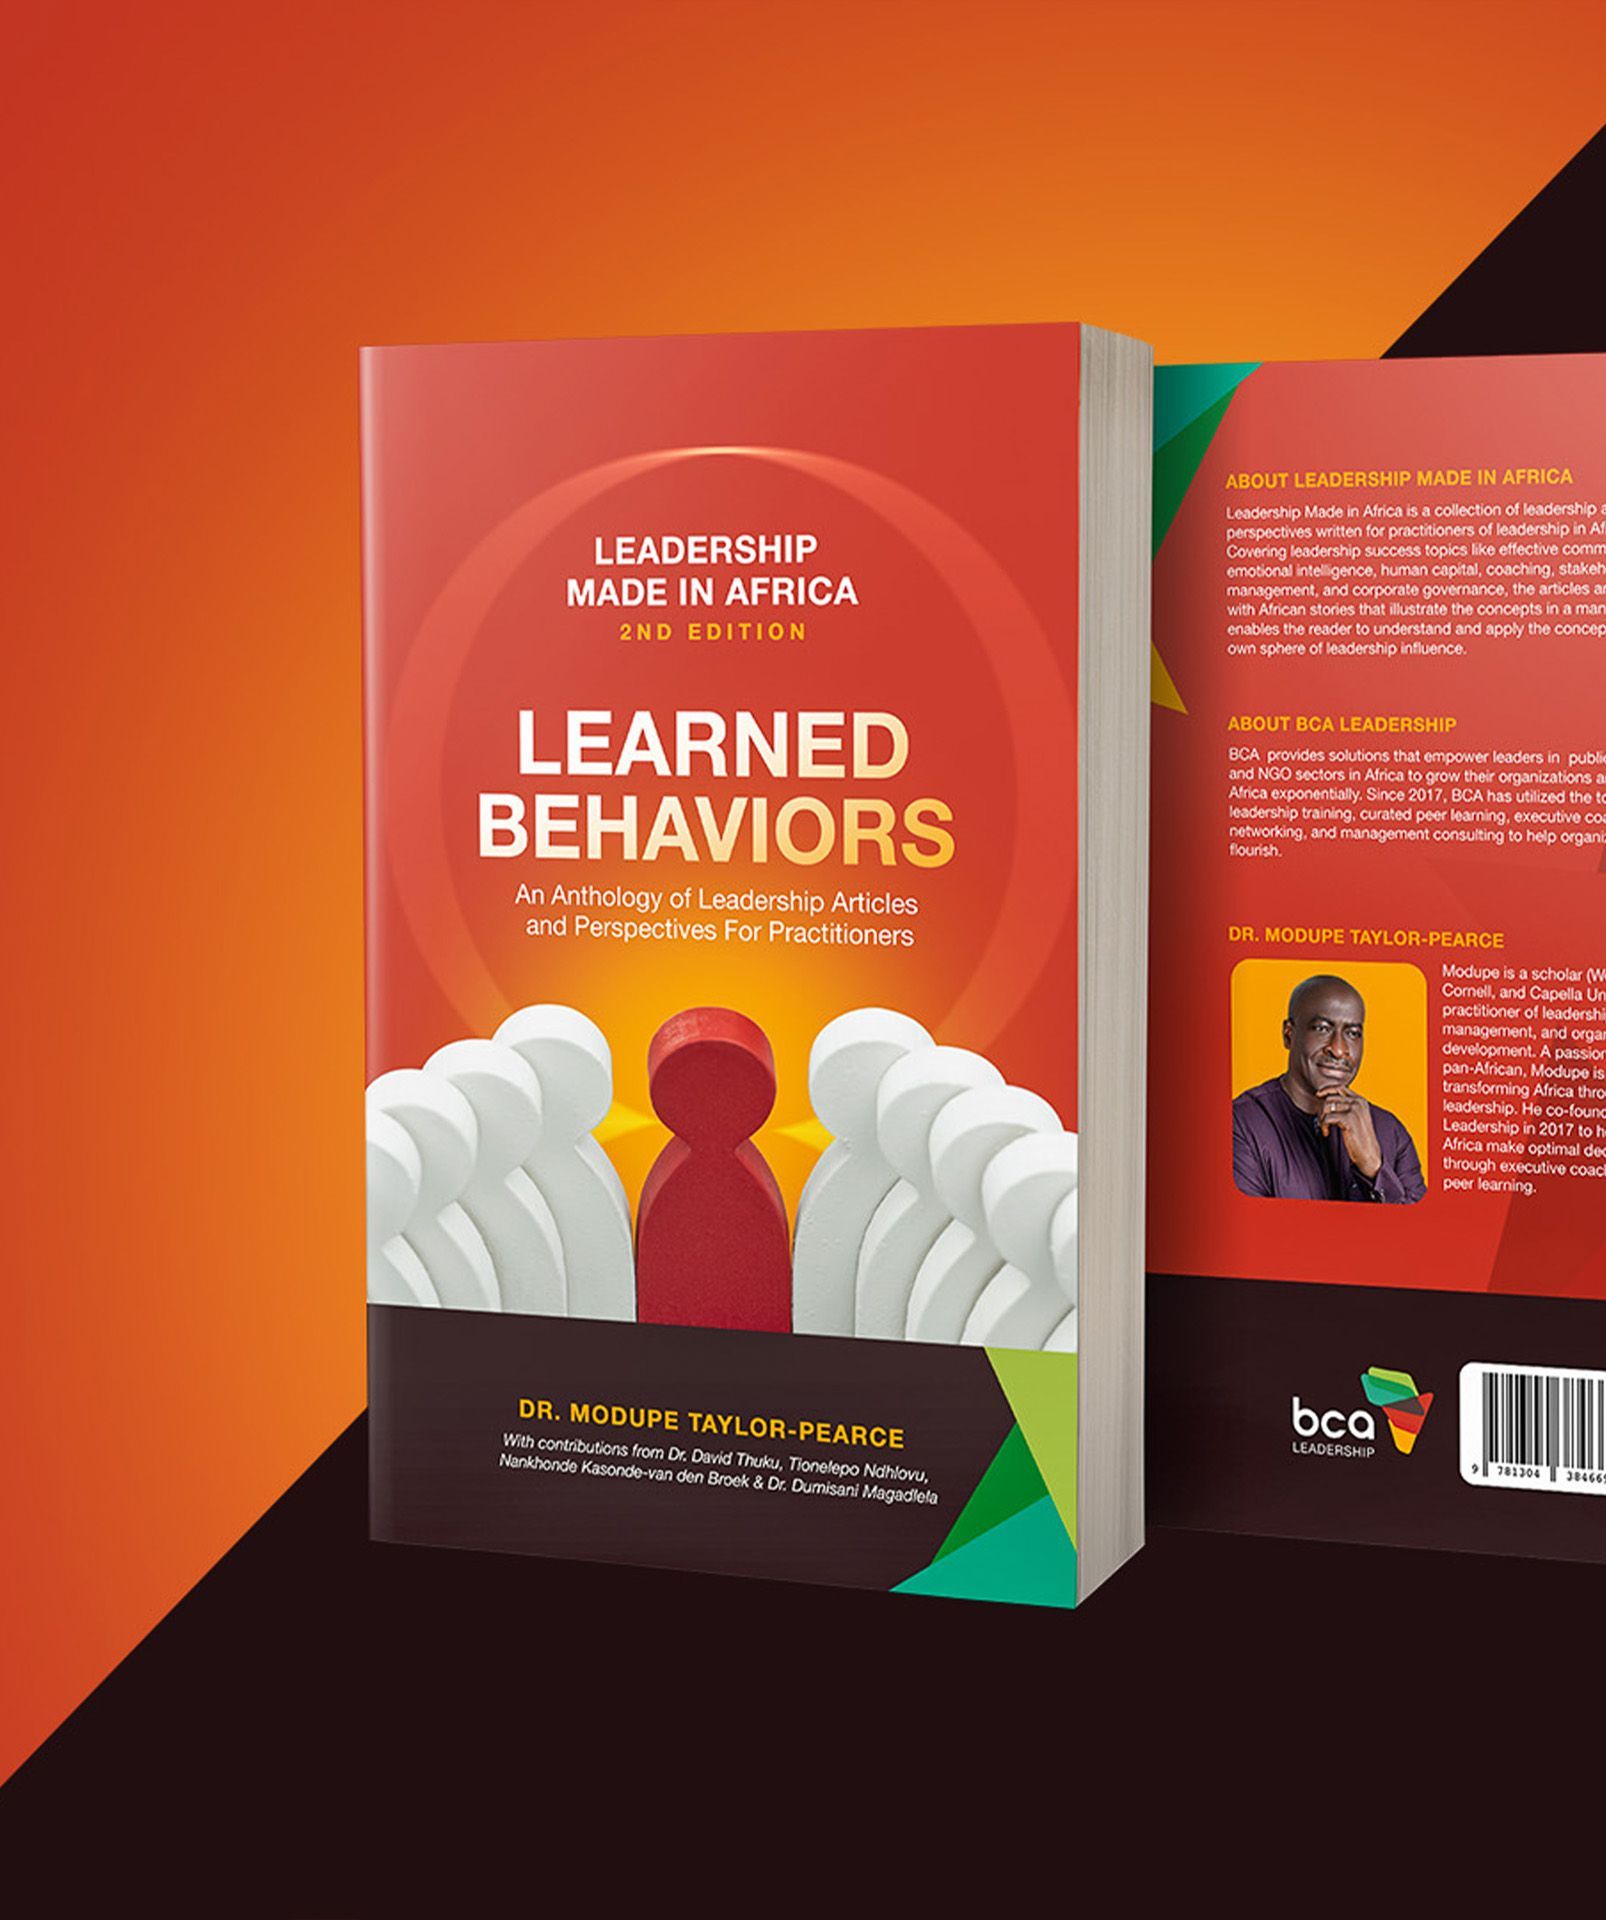 ThirdLaw branding and web design - Learned Behaviors Cover